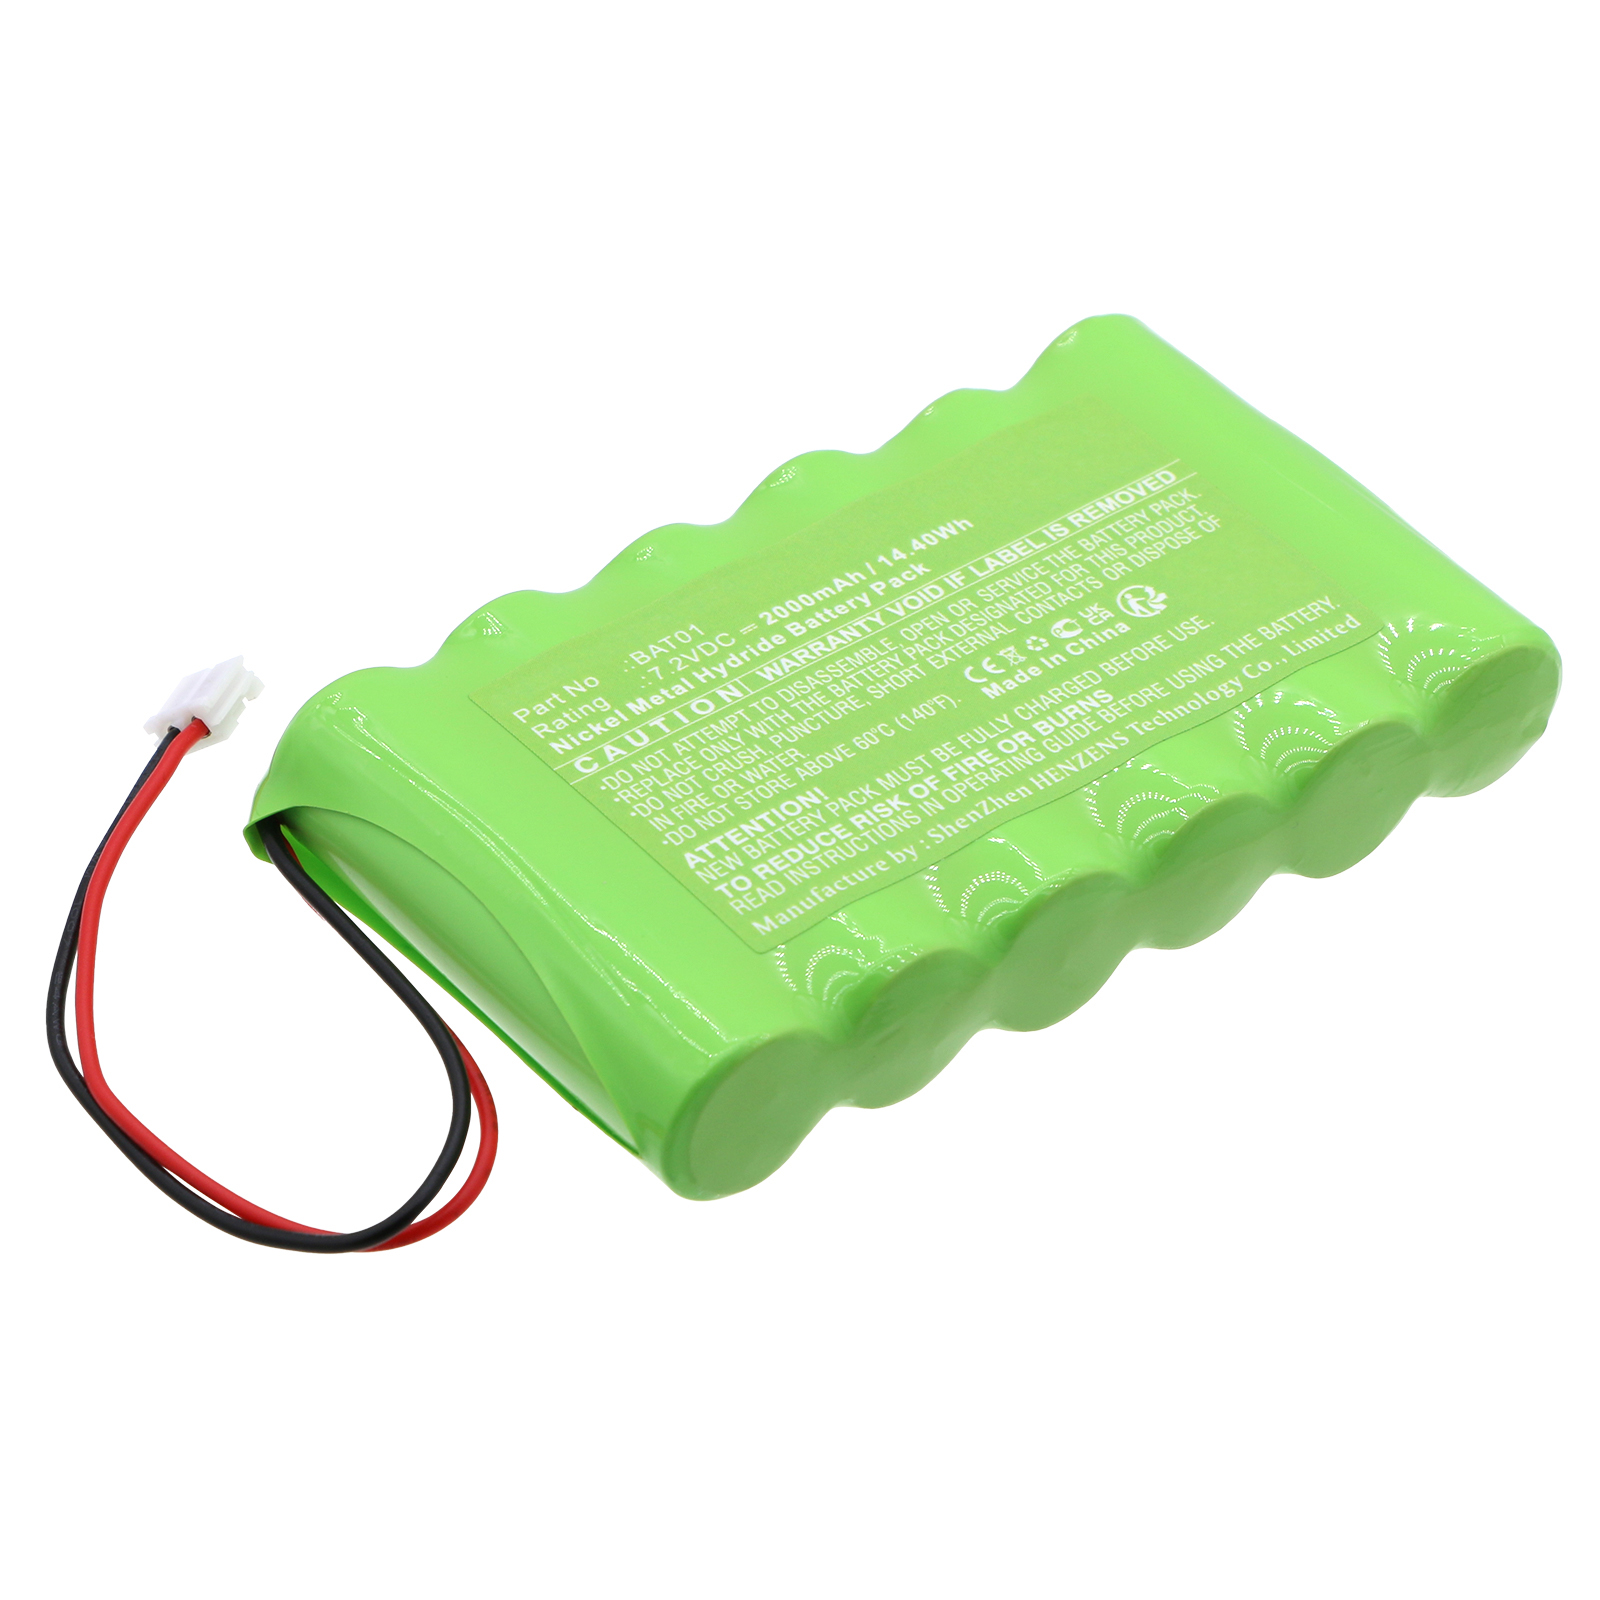 Synergy Digital Alarm System Battery, Compatible with Scantronic BAT01 Alarm System Battery (Ni-MH, 7.2V, 2000mAh)